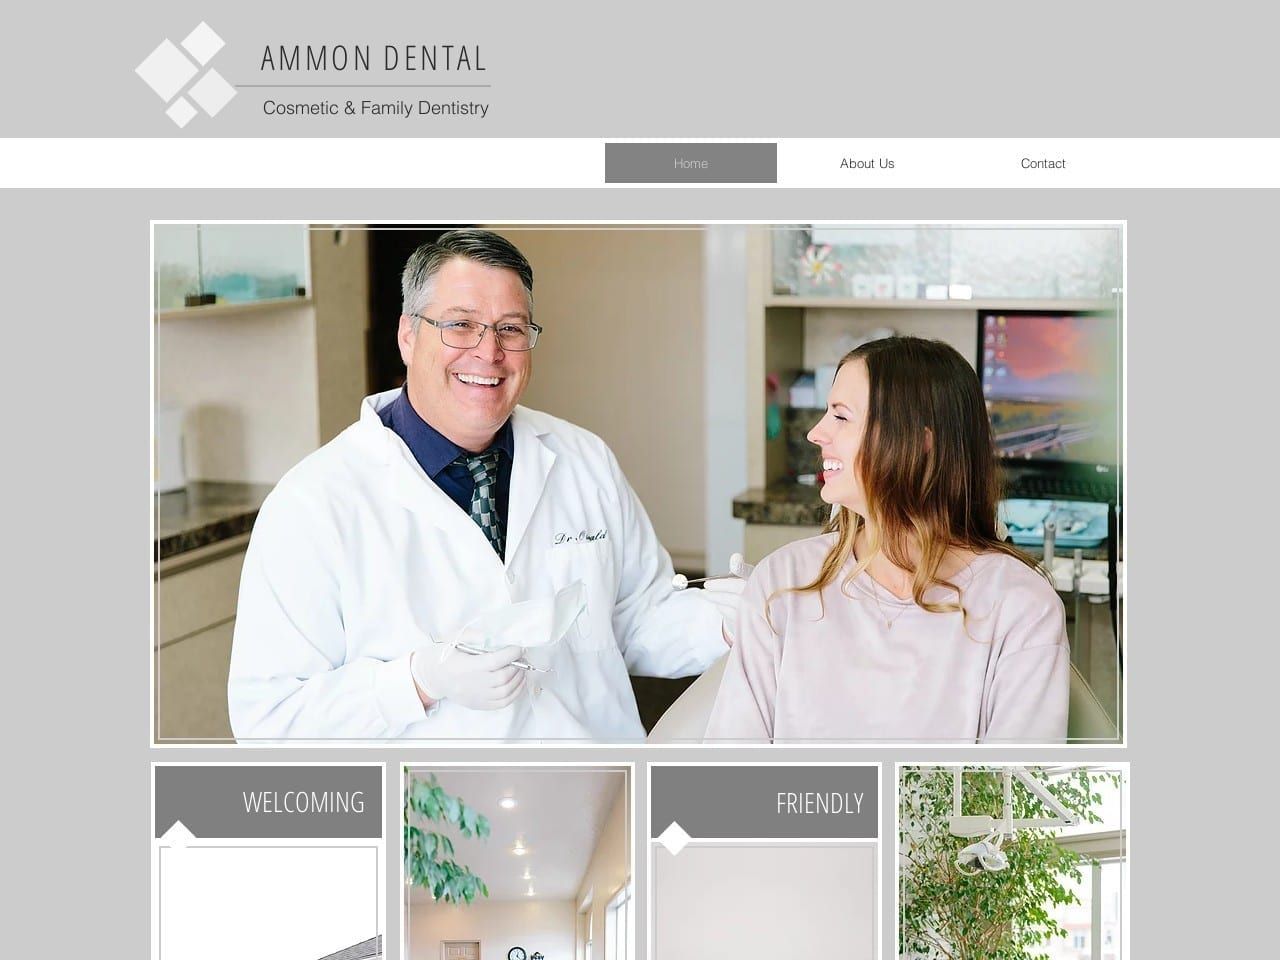 Ammon Dental Website Screenshot from ammondental.com